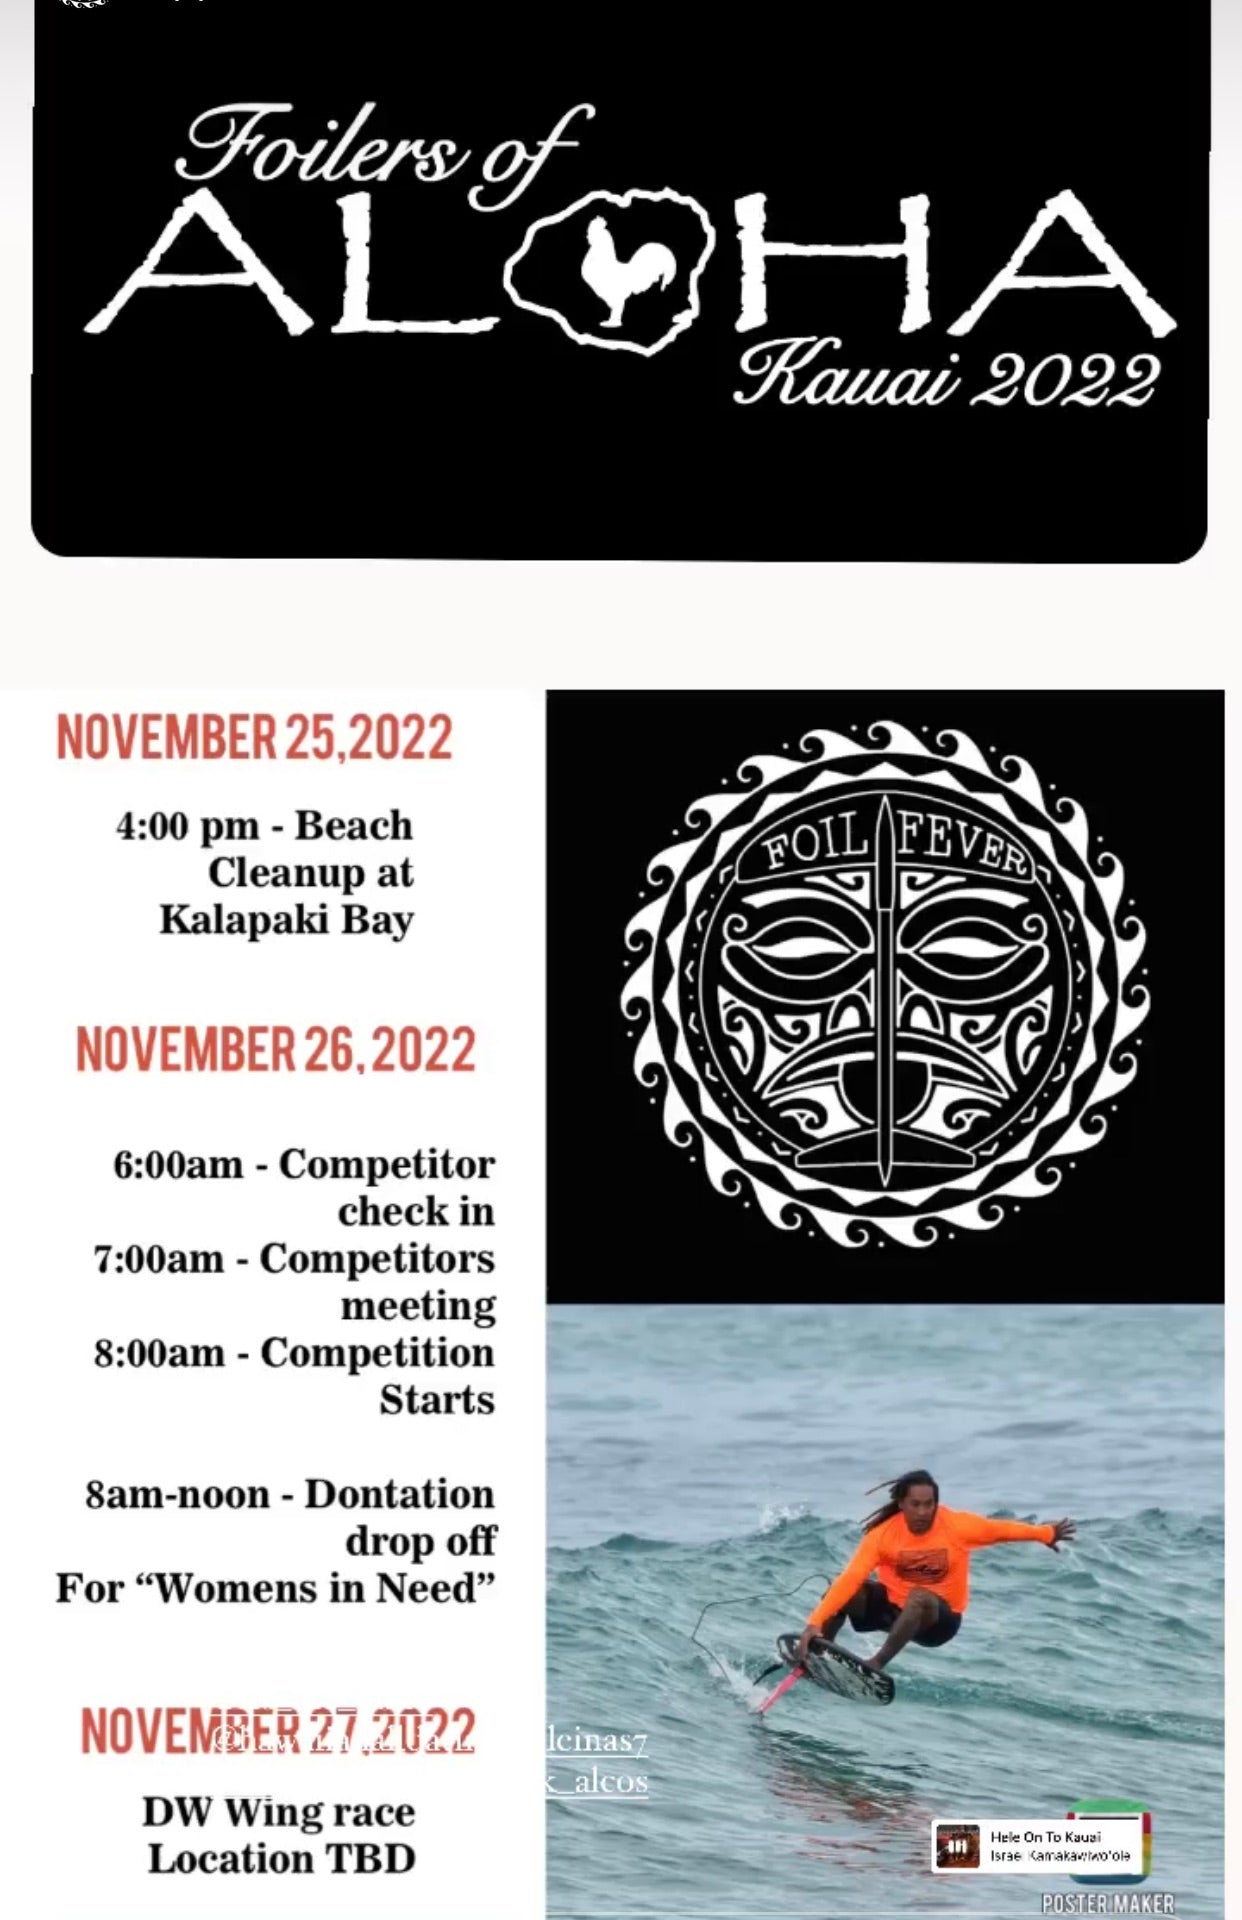 Foilers of Aloha Classic 2022 - Kauai